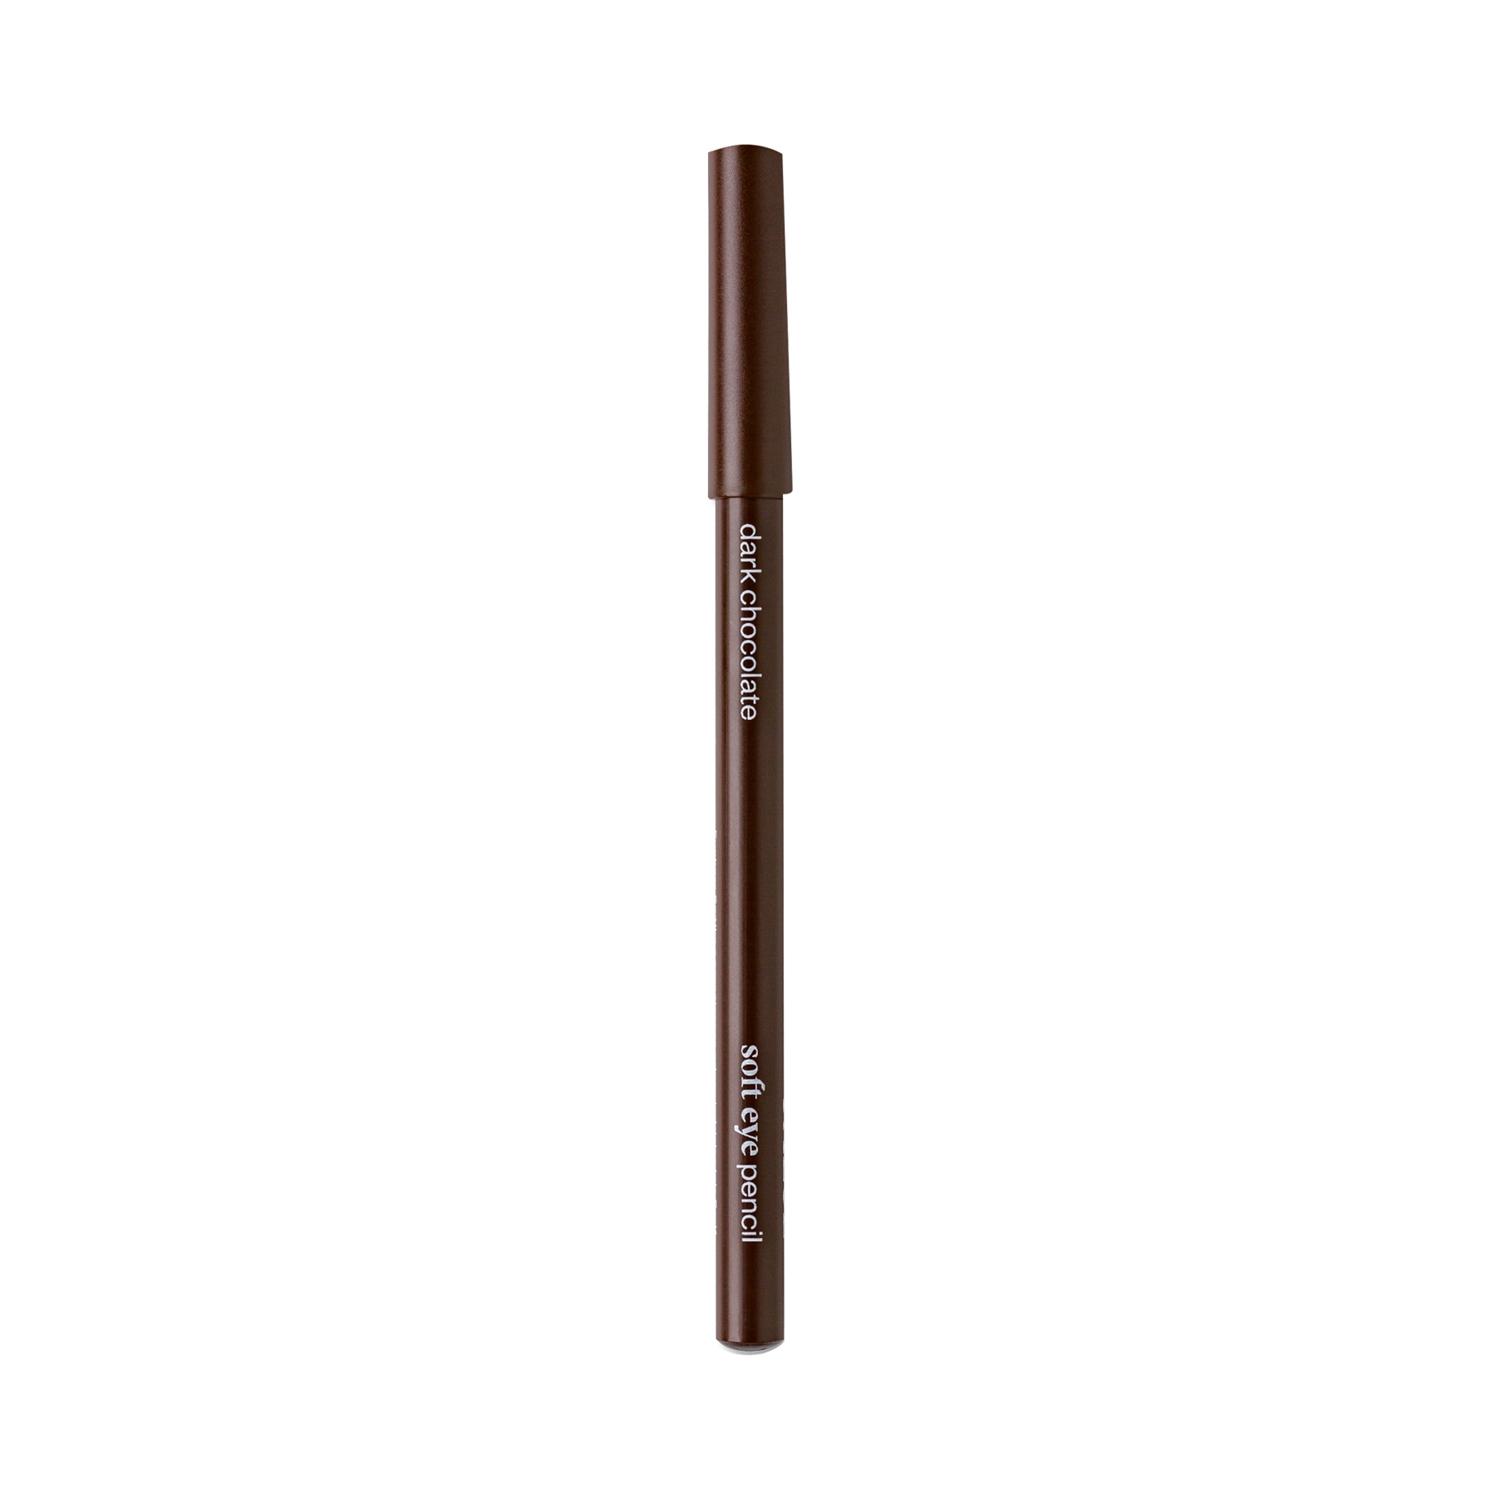 paese cosmetics soft eye pencil - 03 dark chocolate (1.5g)